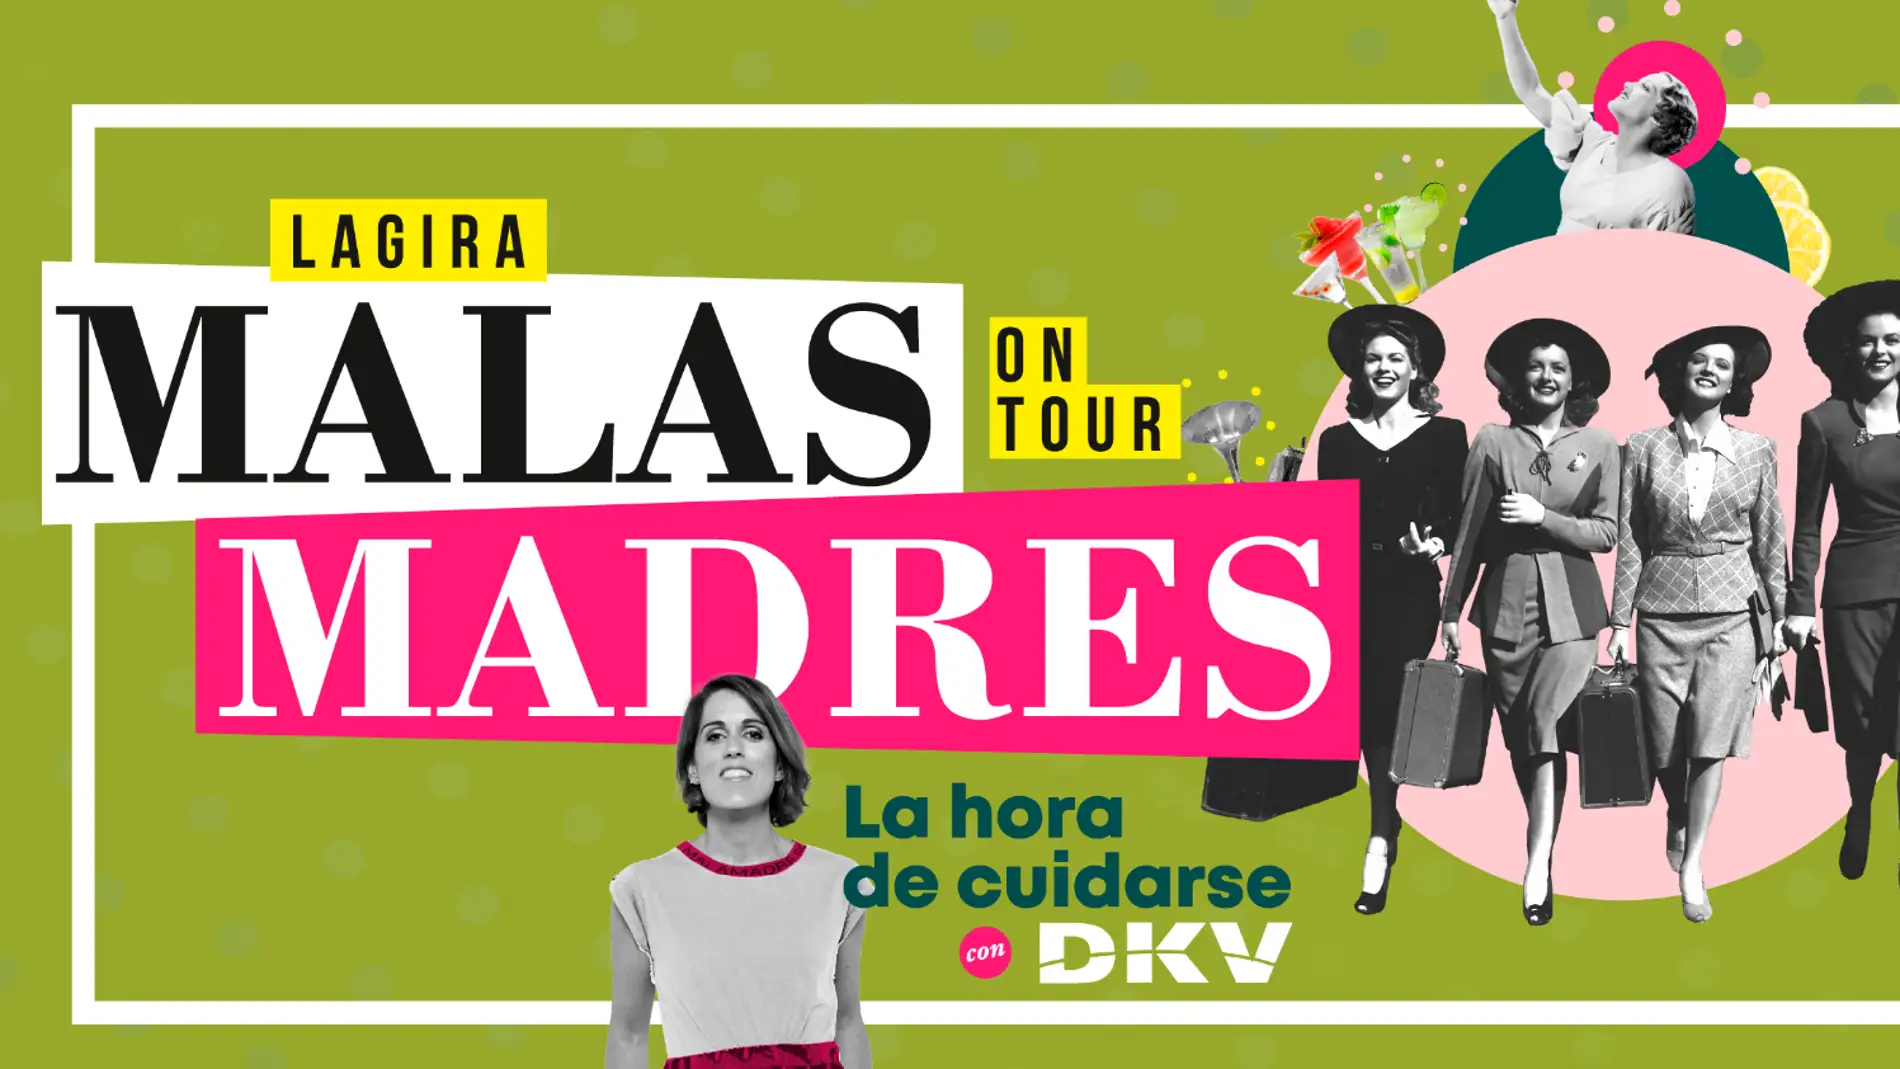 La gira Malas Madres On Tour La hora de cuidarse con DKV